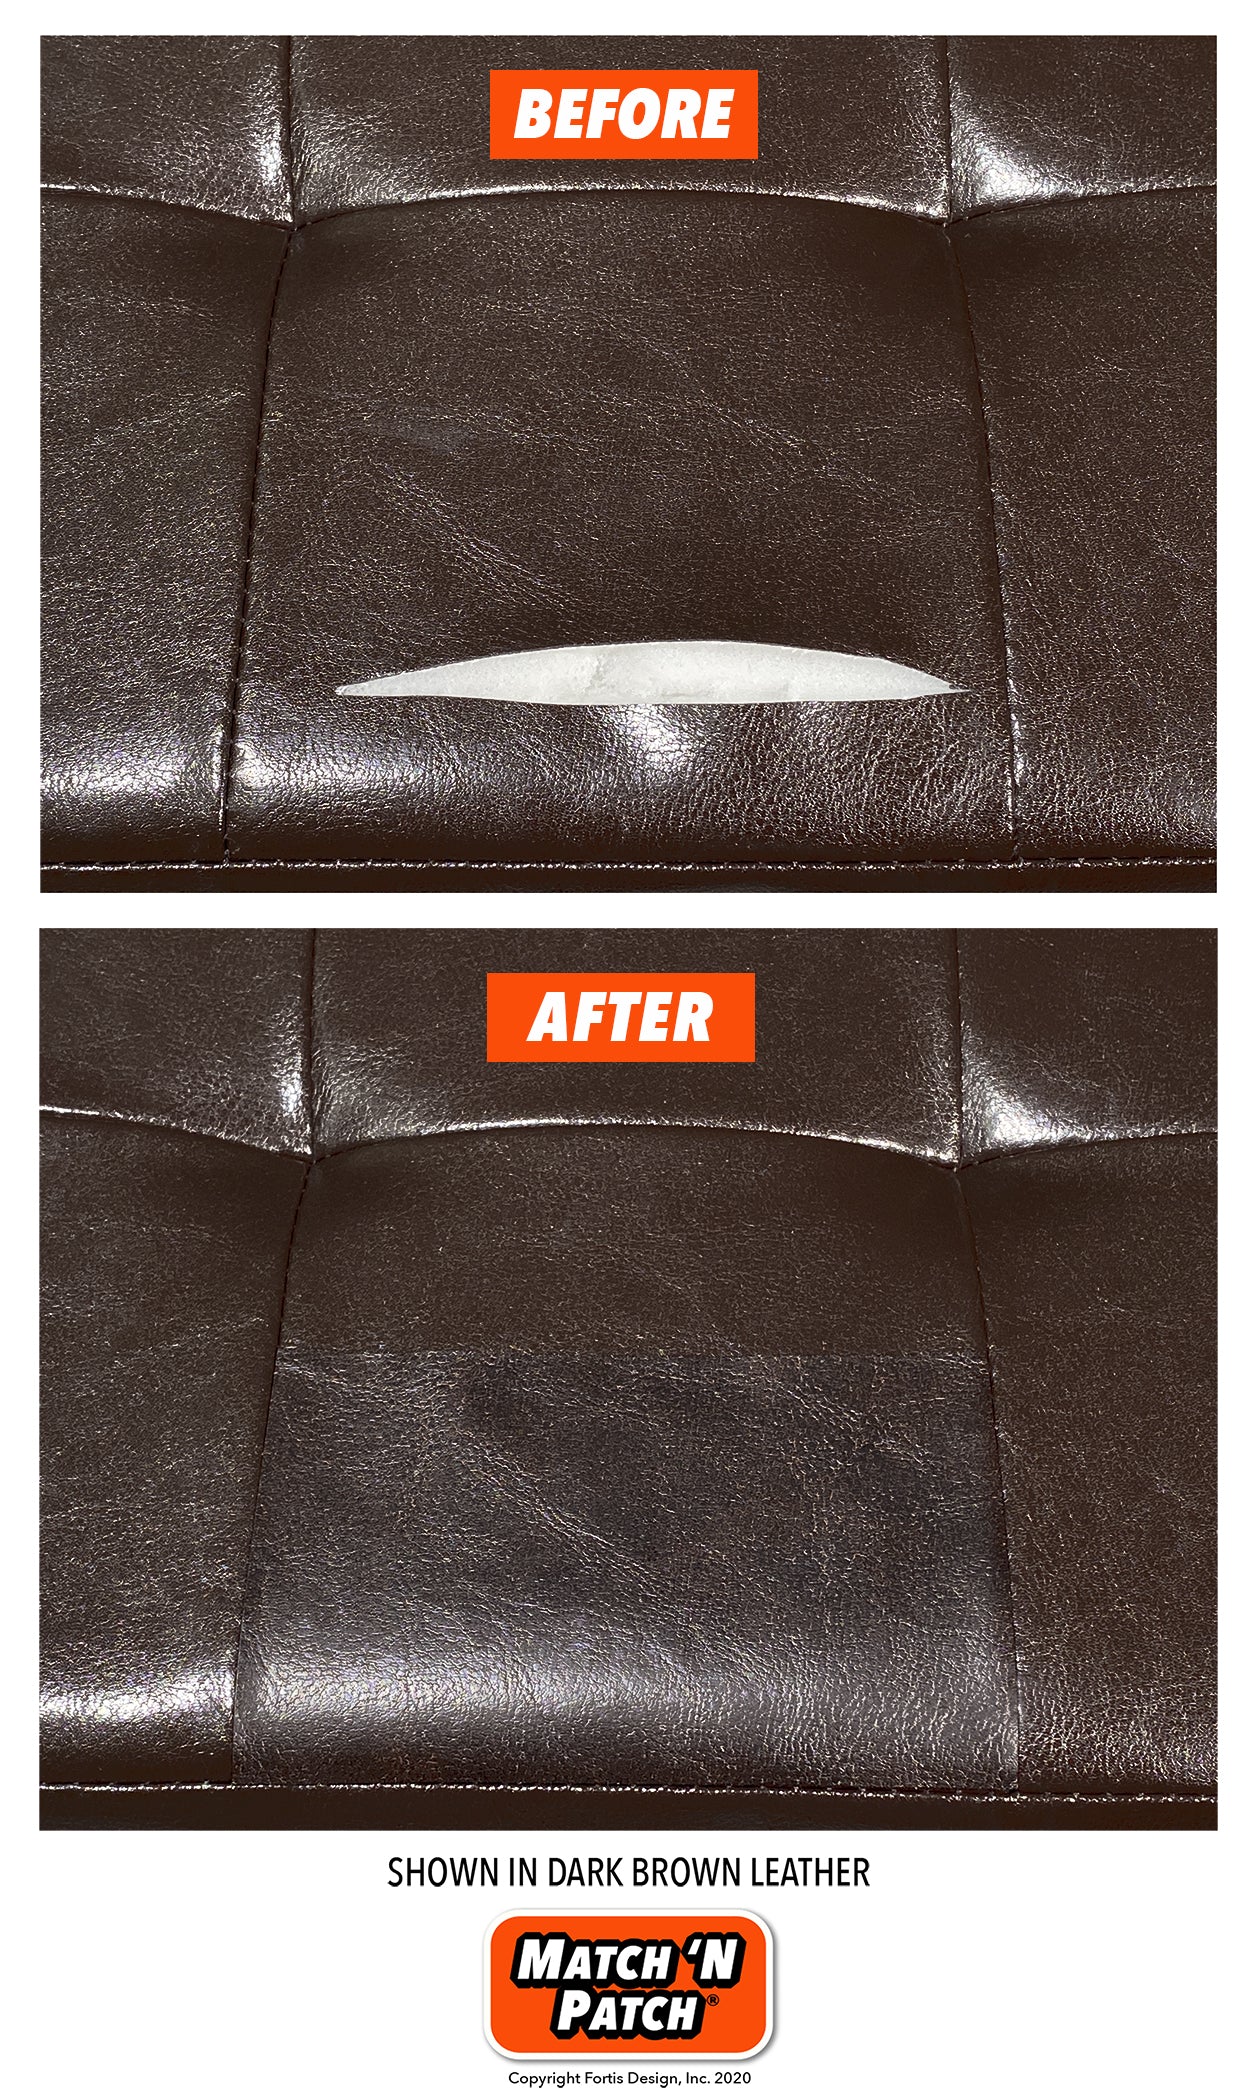 3 Inch X 72 Inch Self-Adhesive Leather Repair Tape, Brown